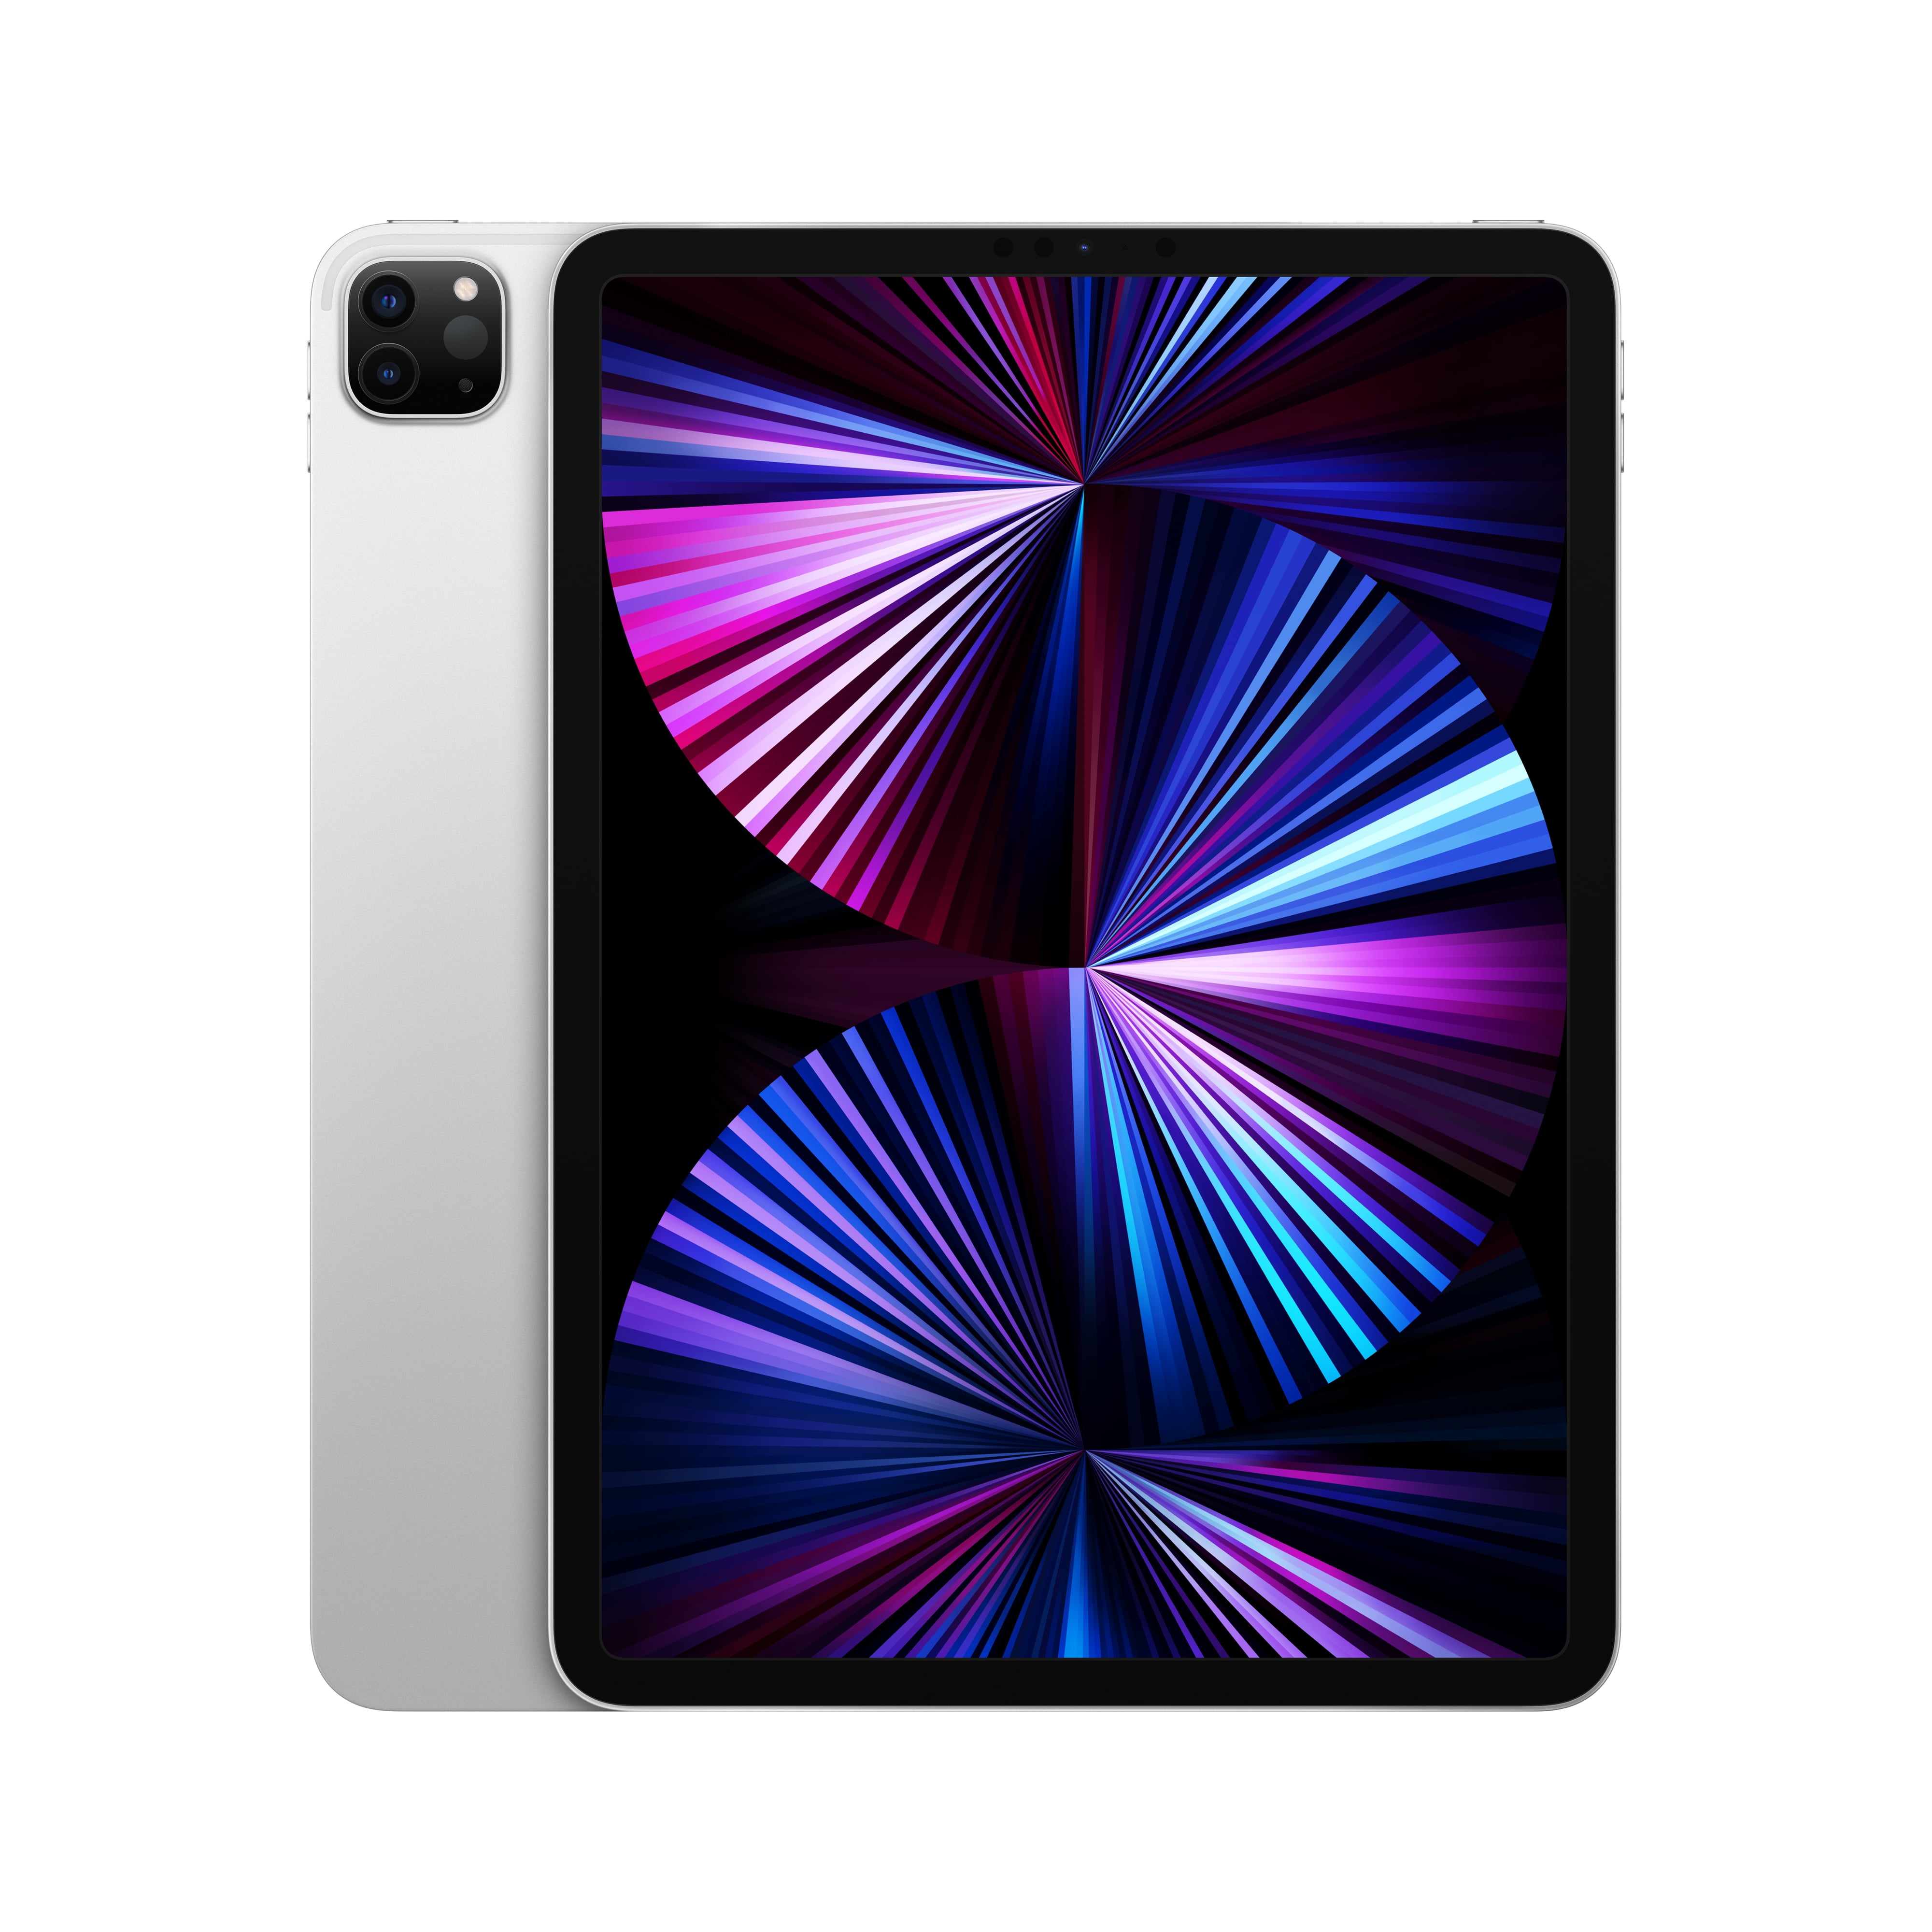 fiction Air mail architect 2021 Apple 11-inch iPad Pro Wi-Fi 512GB - Space Gray (3rd Generation) -  Walmart.com